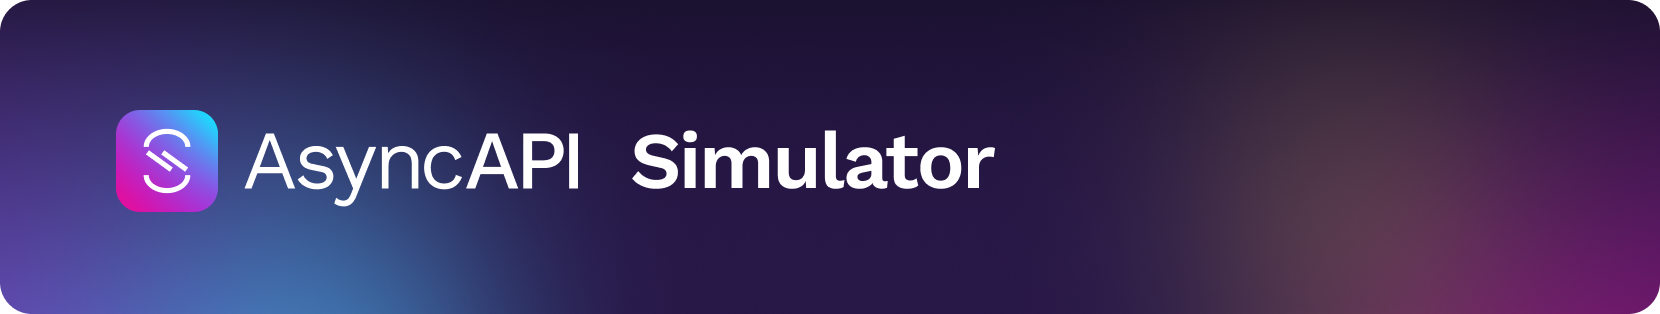 github-repobanner-simulator.png